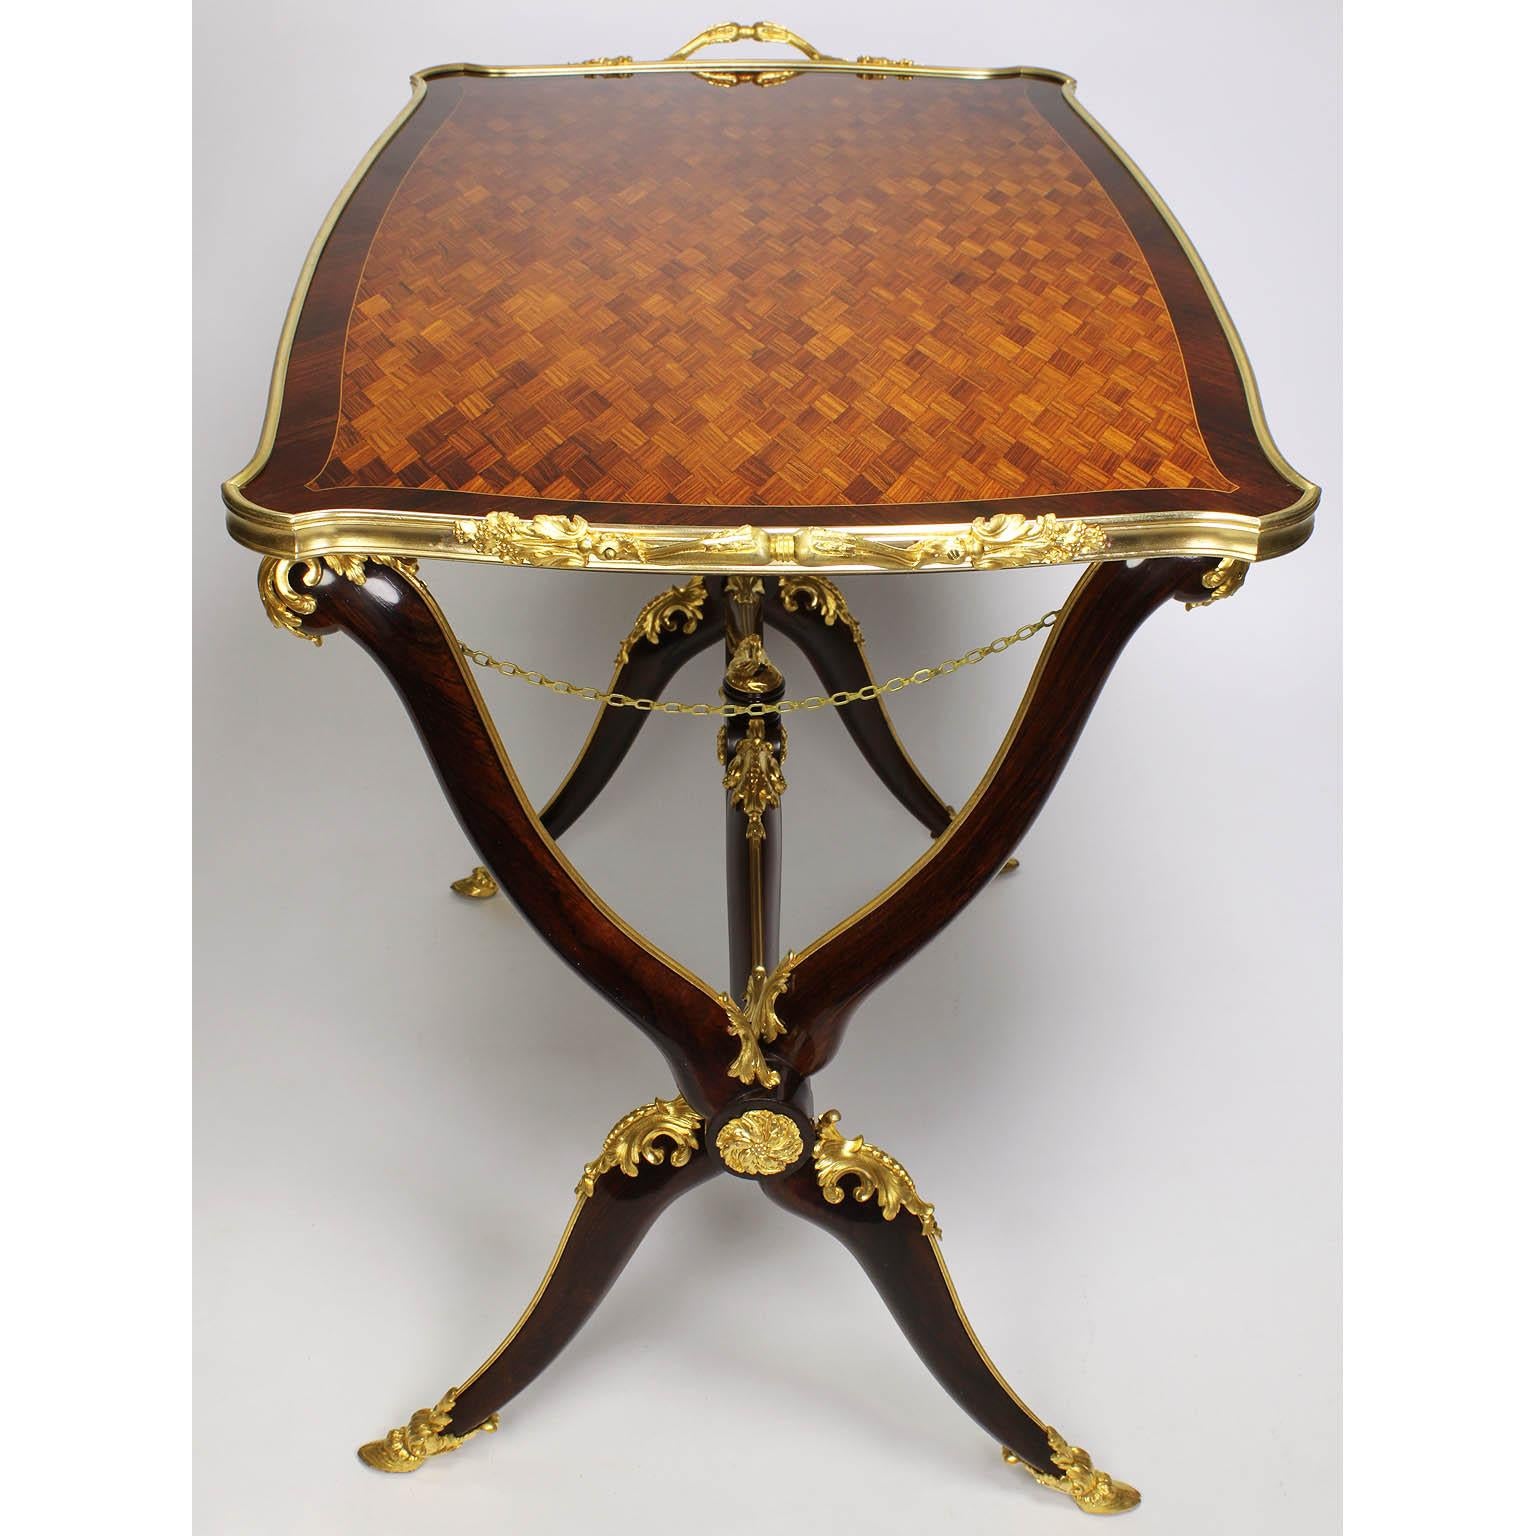 Belle Époque French 19th Century Ormolu Mounted Kingwood Parquetry Tea-Table, François Linke